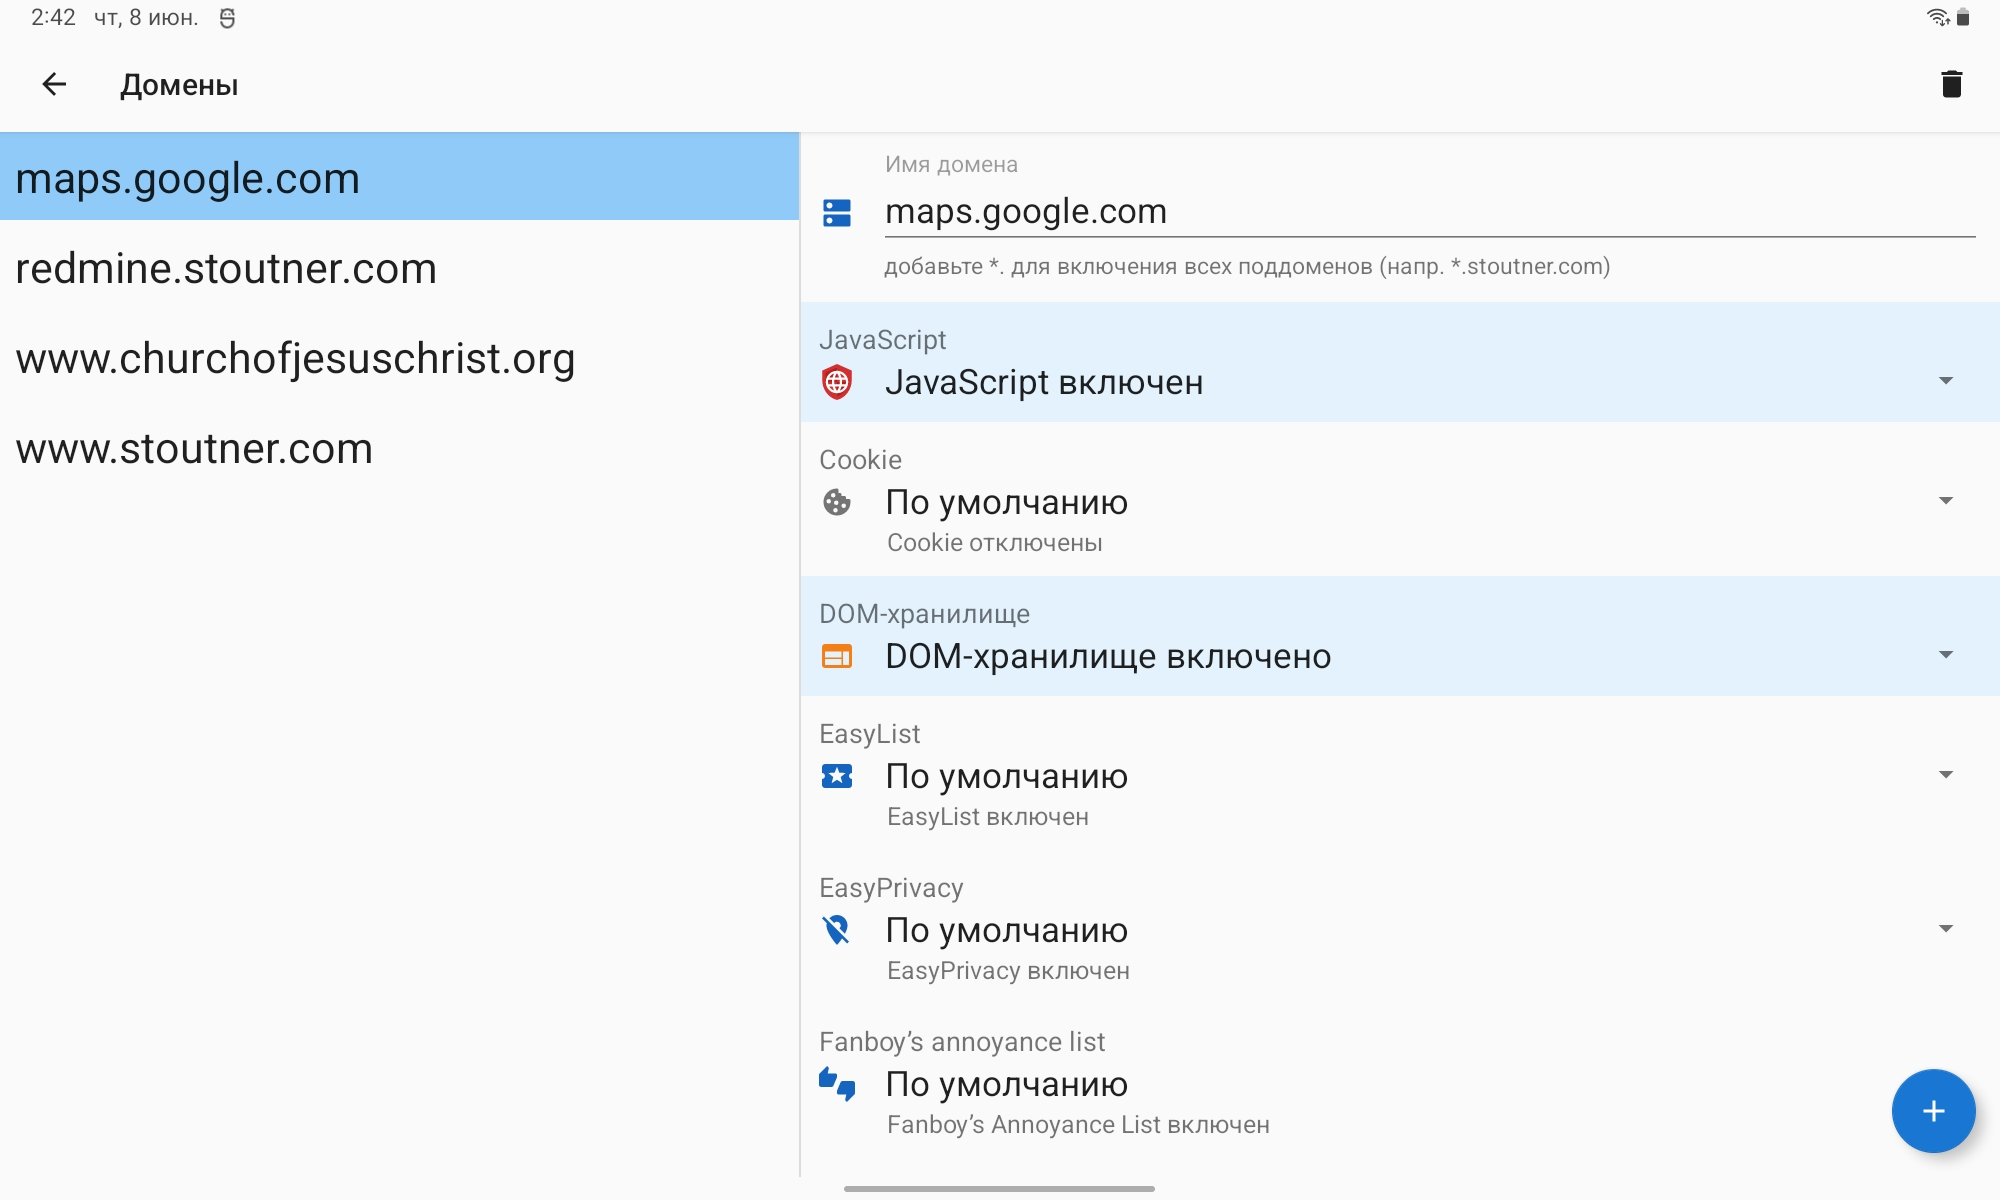 fastlane/metadata/android/ru-RU/images/phoneScreenshots/07 - 10-Inch Tablet Domains - ru.png